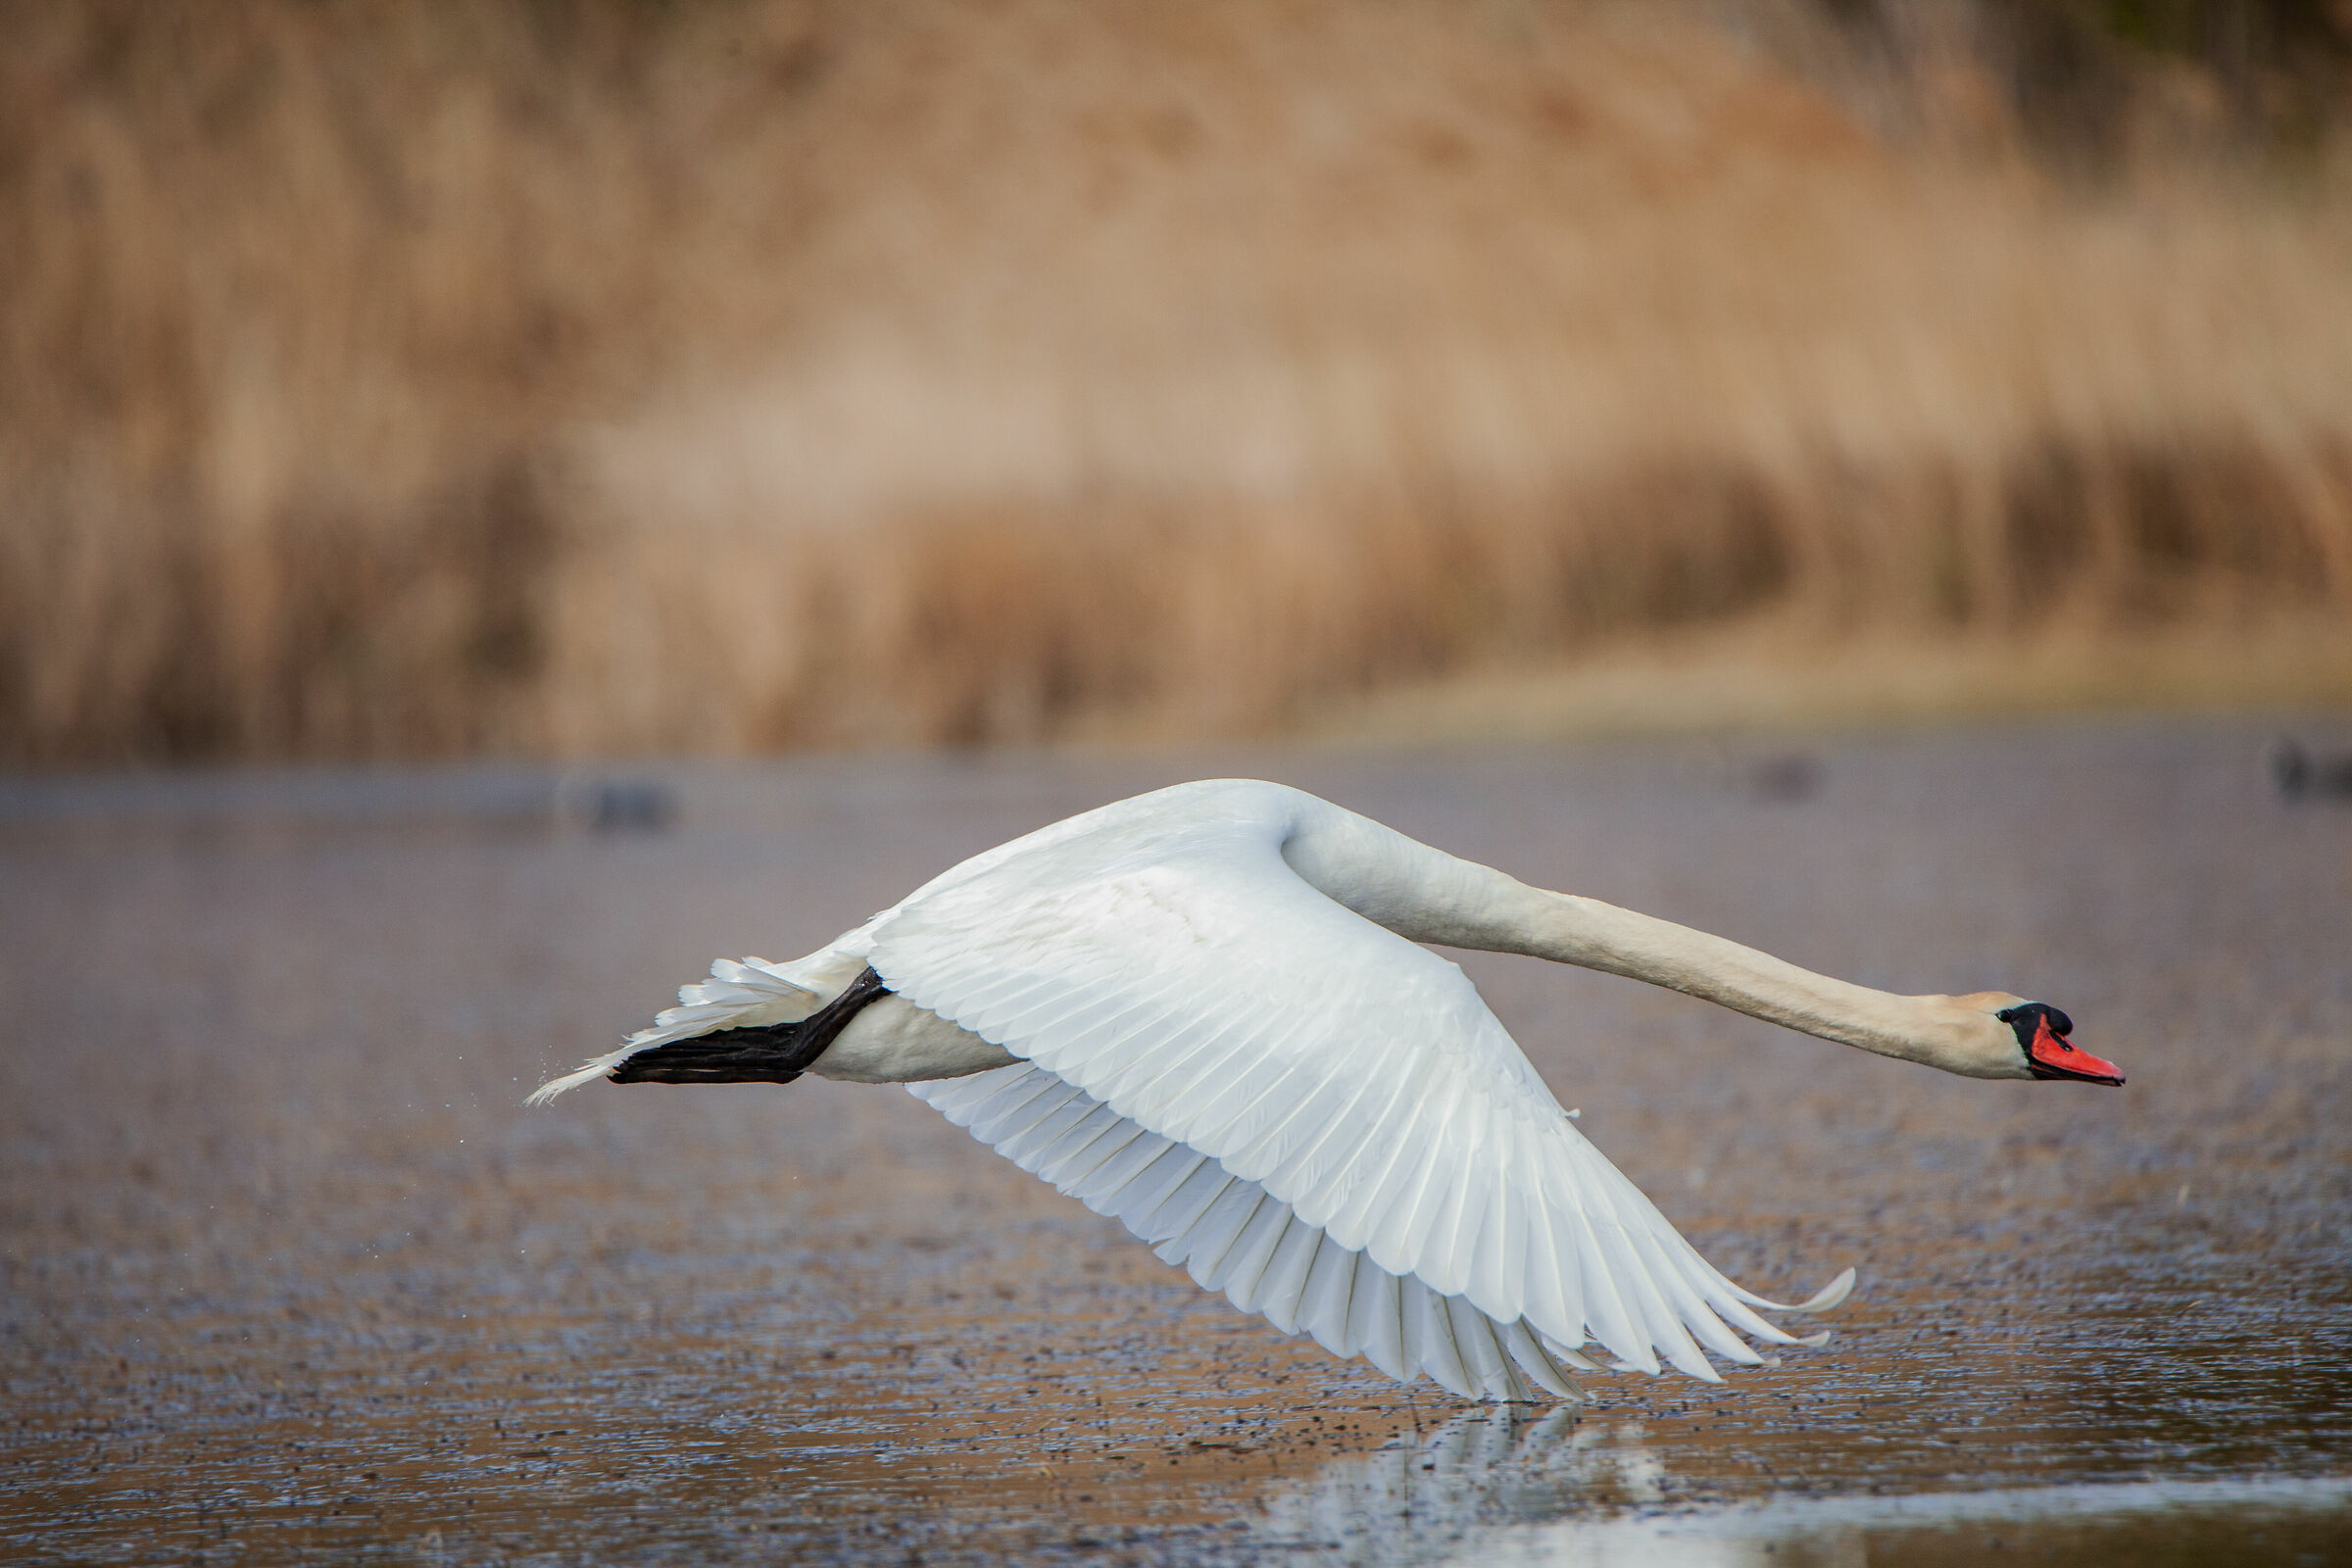 Royal swan in flight...